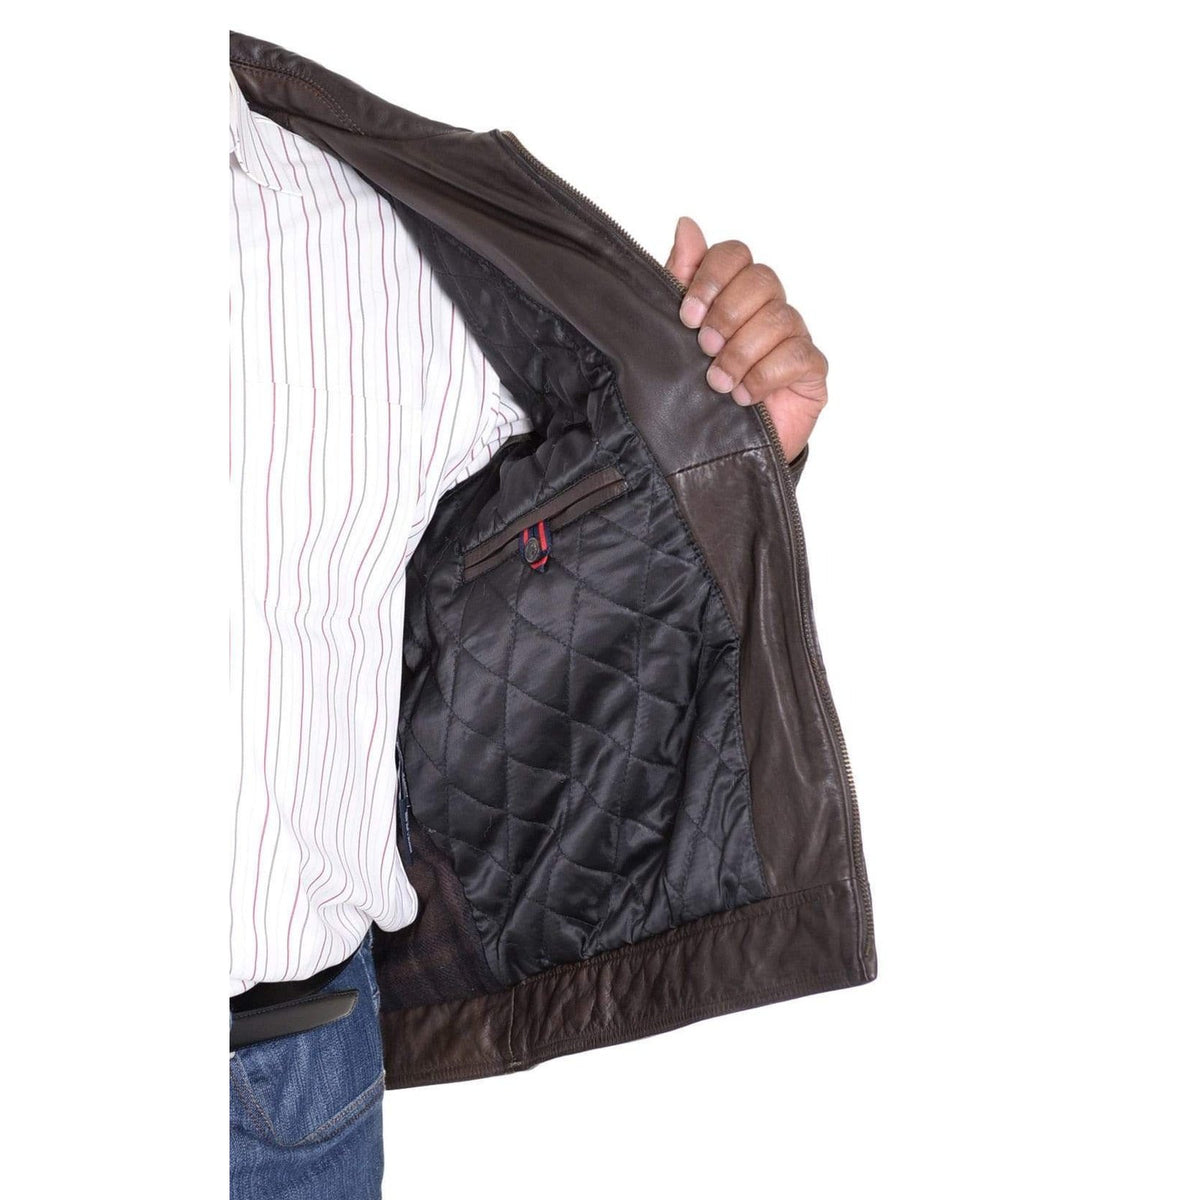 Tommy Hilfiger Solid Brown Genuine Leather Jacket With Shoulder Epaulets - The Suit Depot